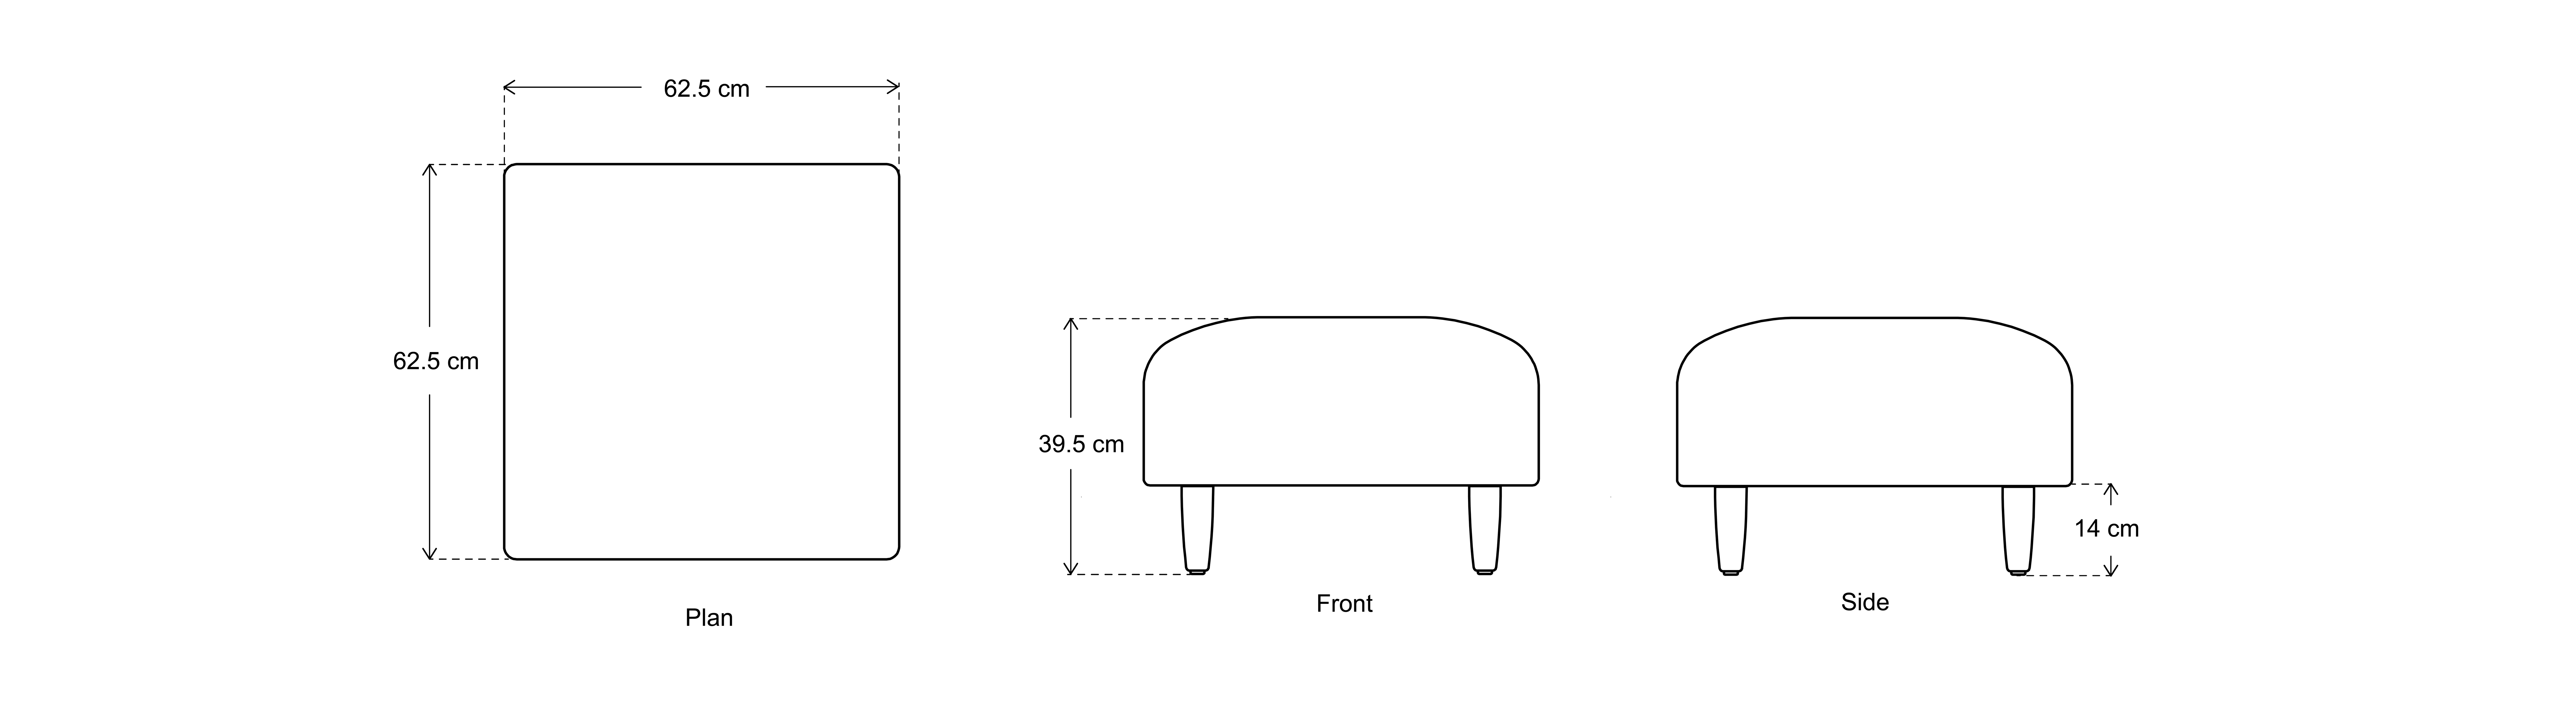 Footstool dimensions